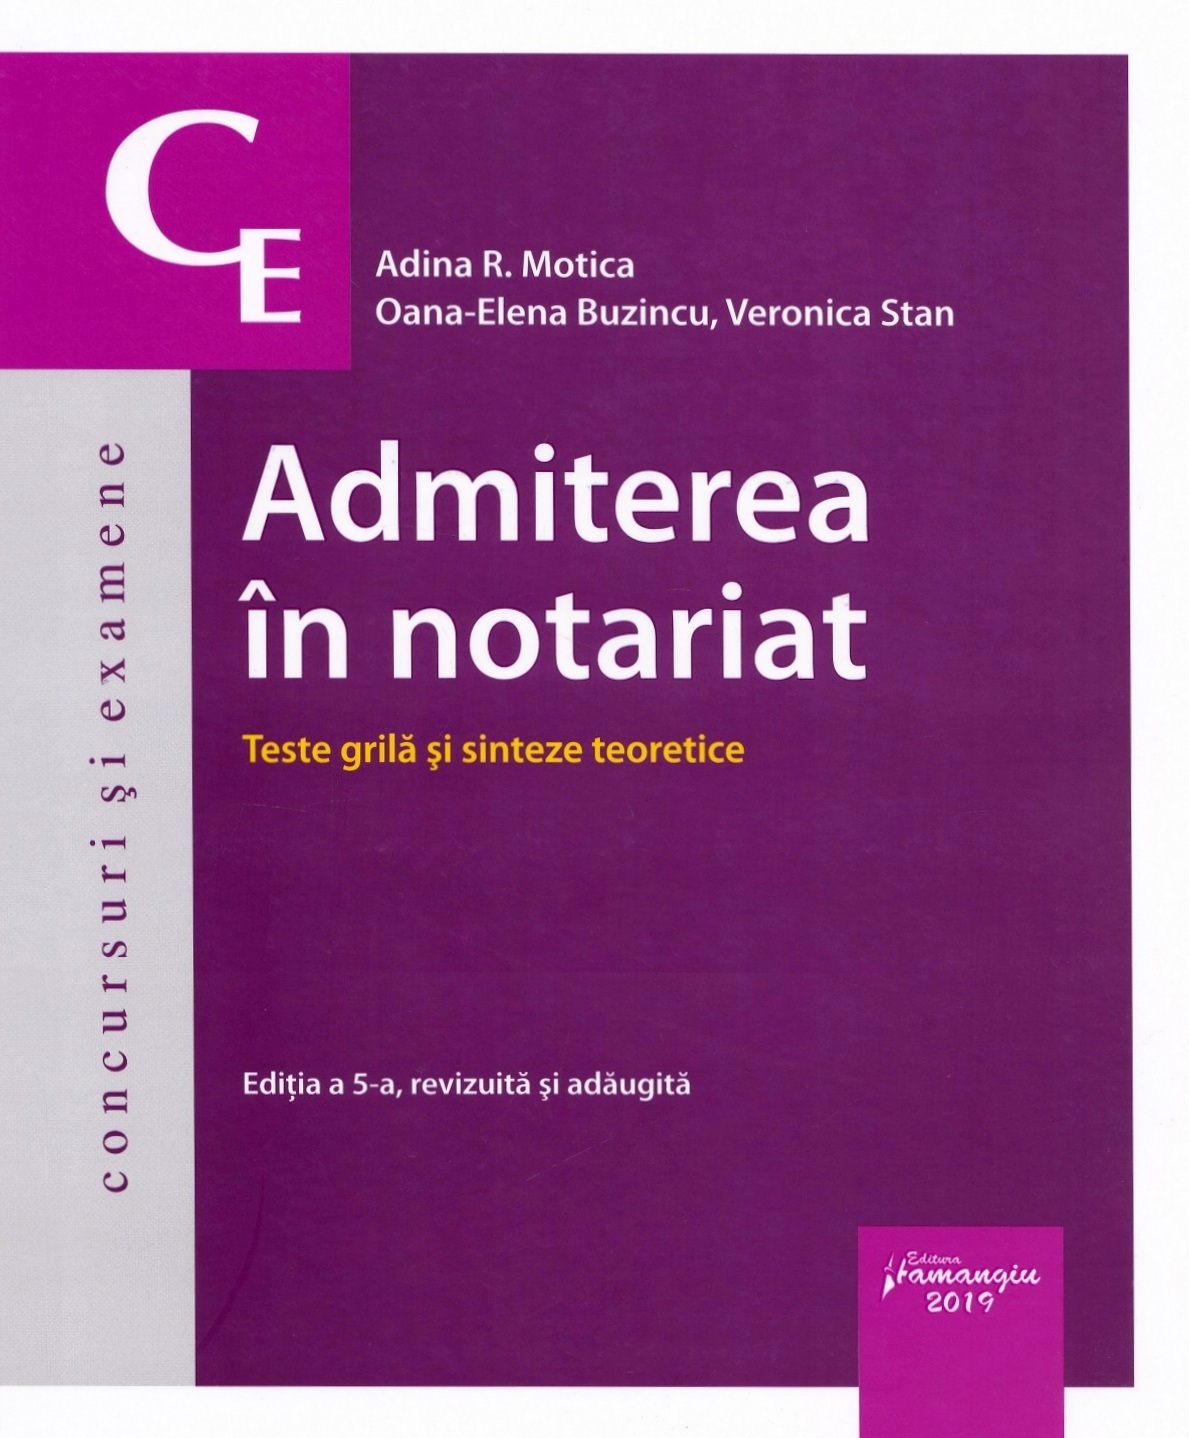 Admiterea in notariat. Teste grila si sinteze teoretice ed.5 - Adina R. Motica, Oana-Elena Buzincu